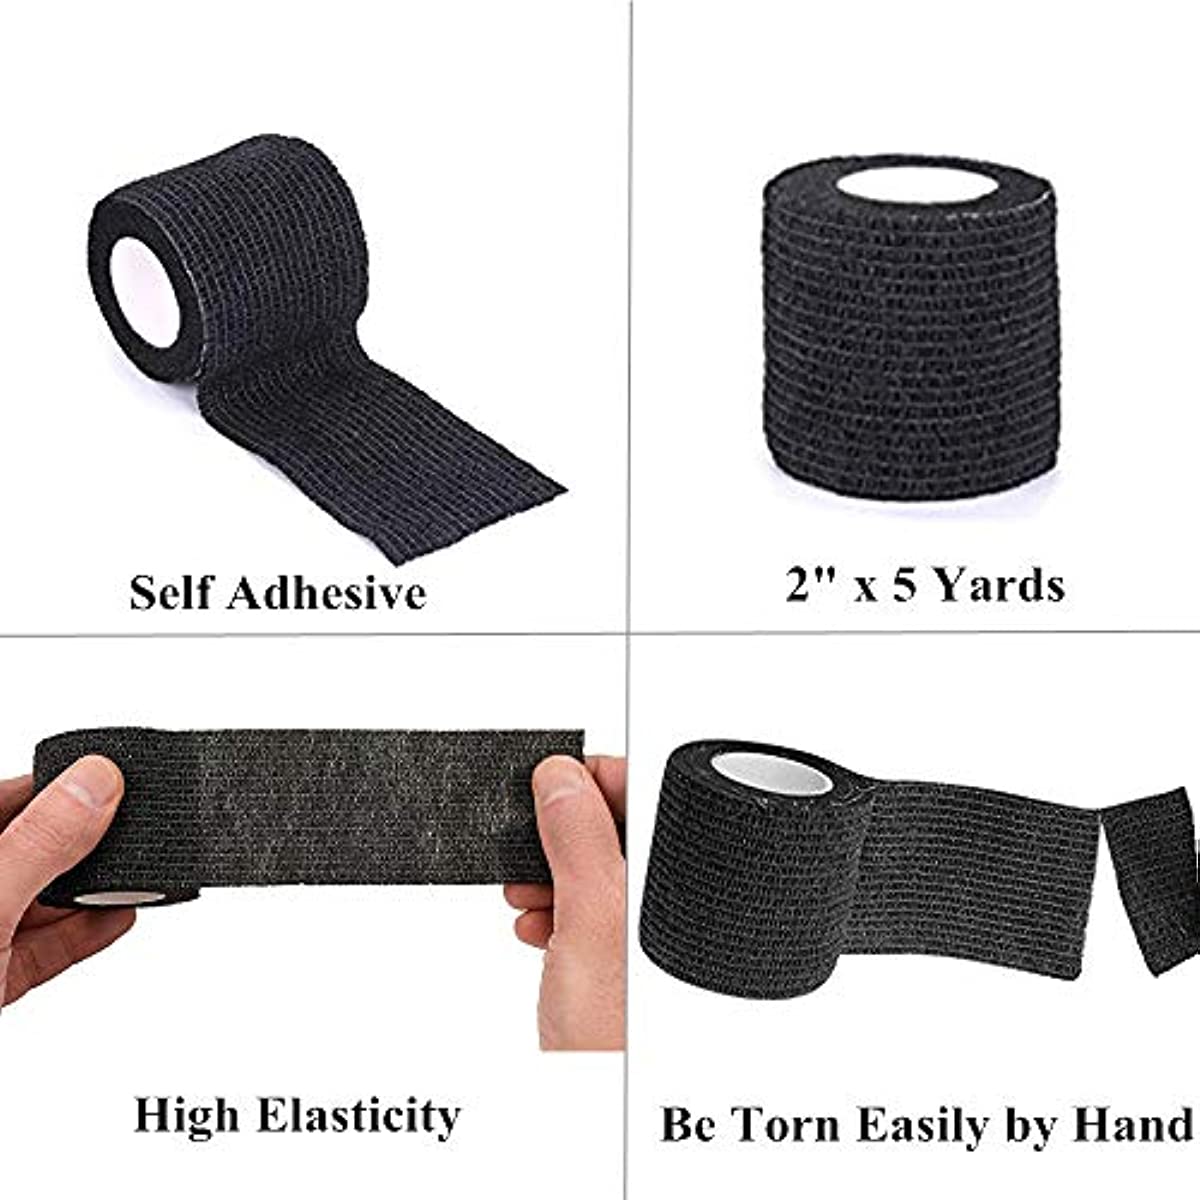 Self-Adherent Grip Tape - Yuelong 8Pcs Cohesive Tape Grip Wrap Cover Self Adhesive Tape Strong Sports Tape Black Bandage Rolls Athletic Tape